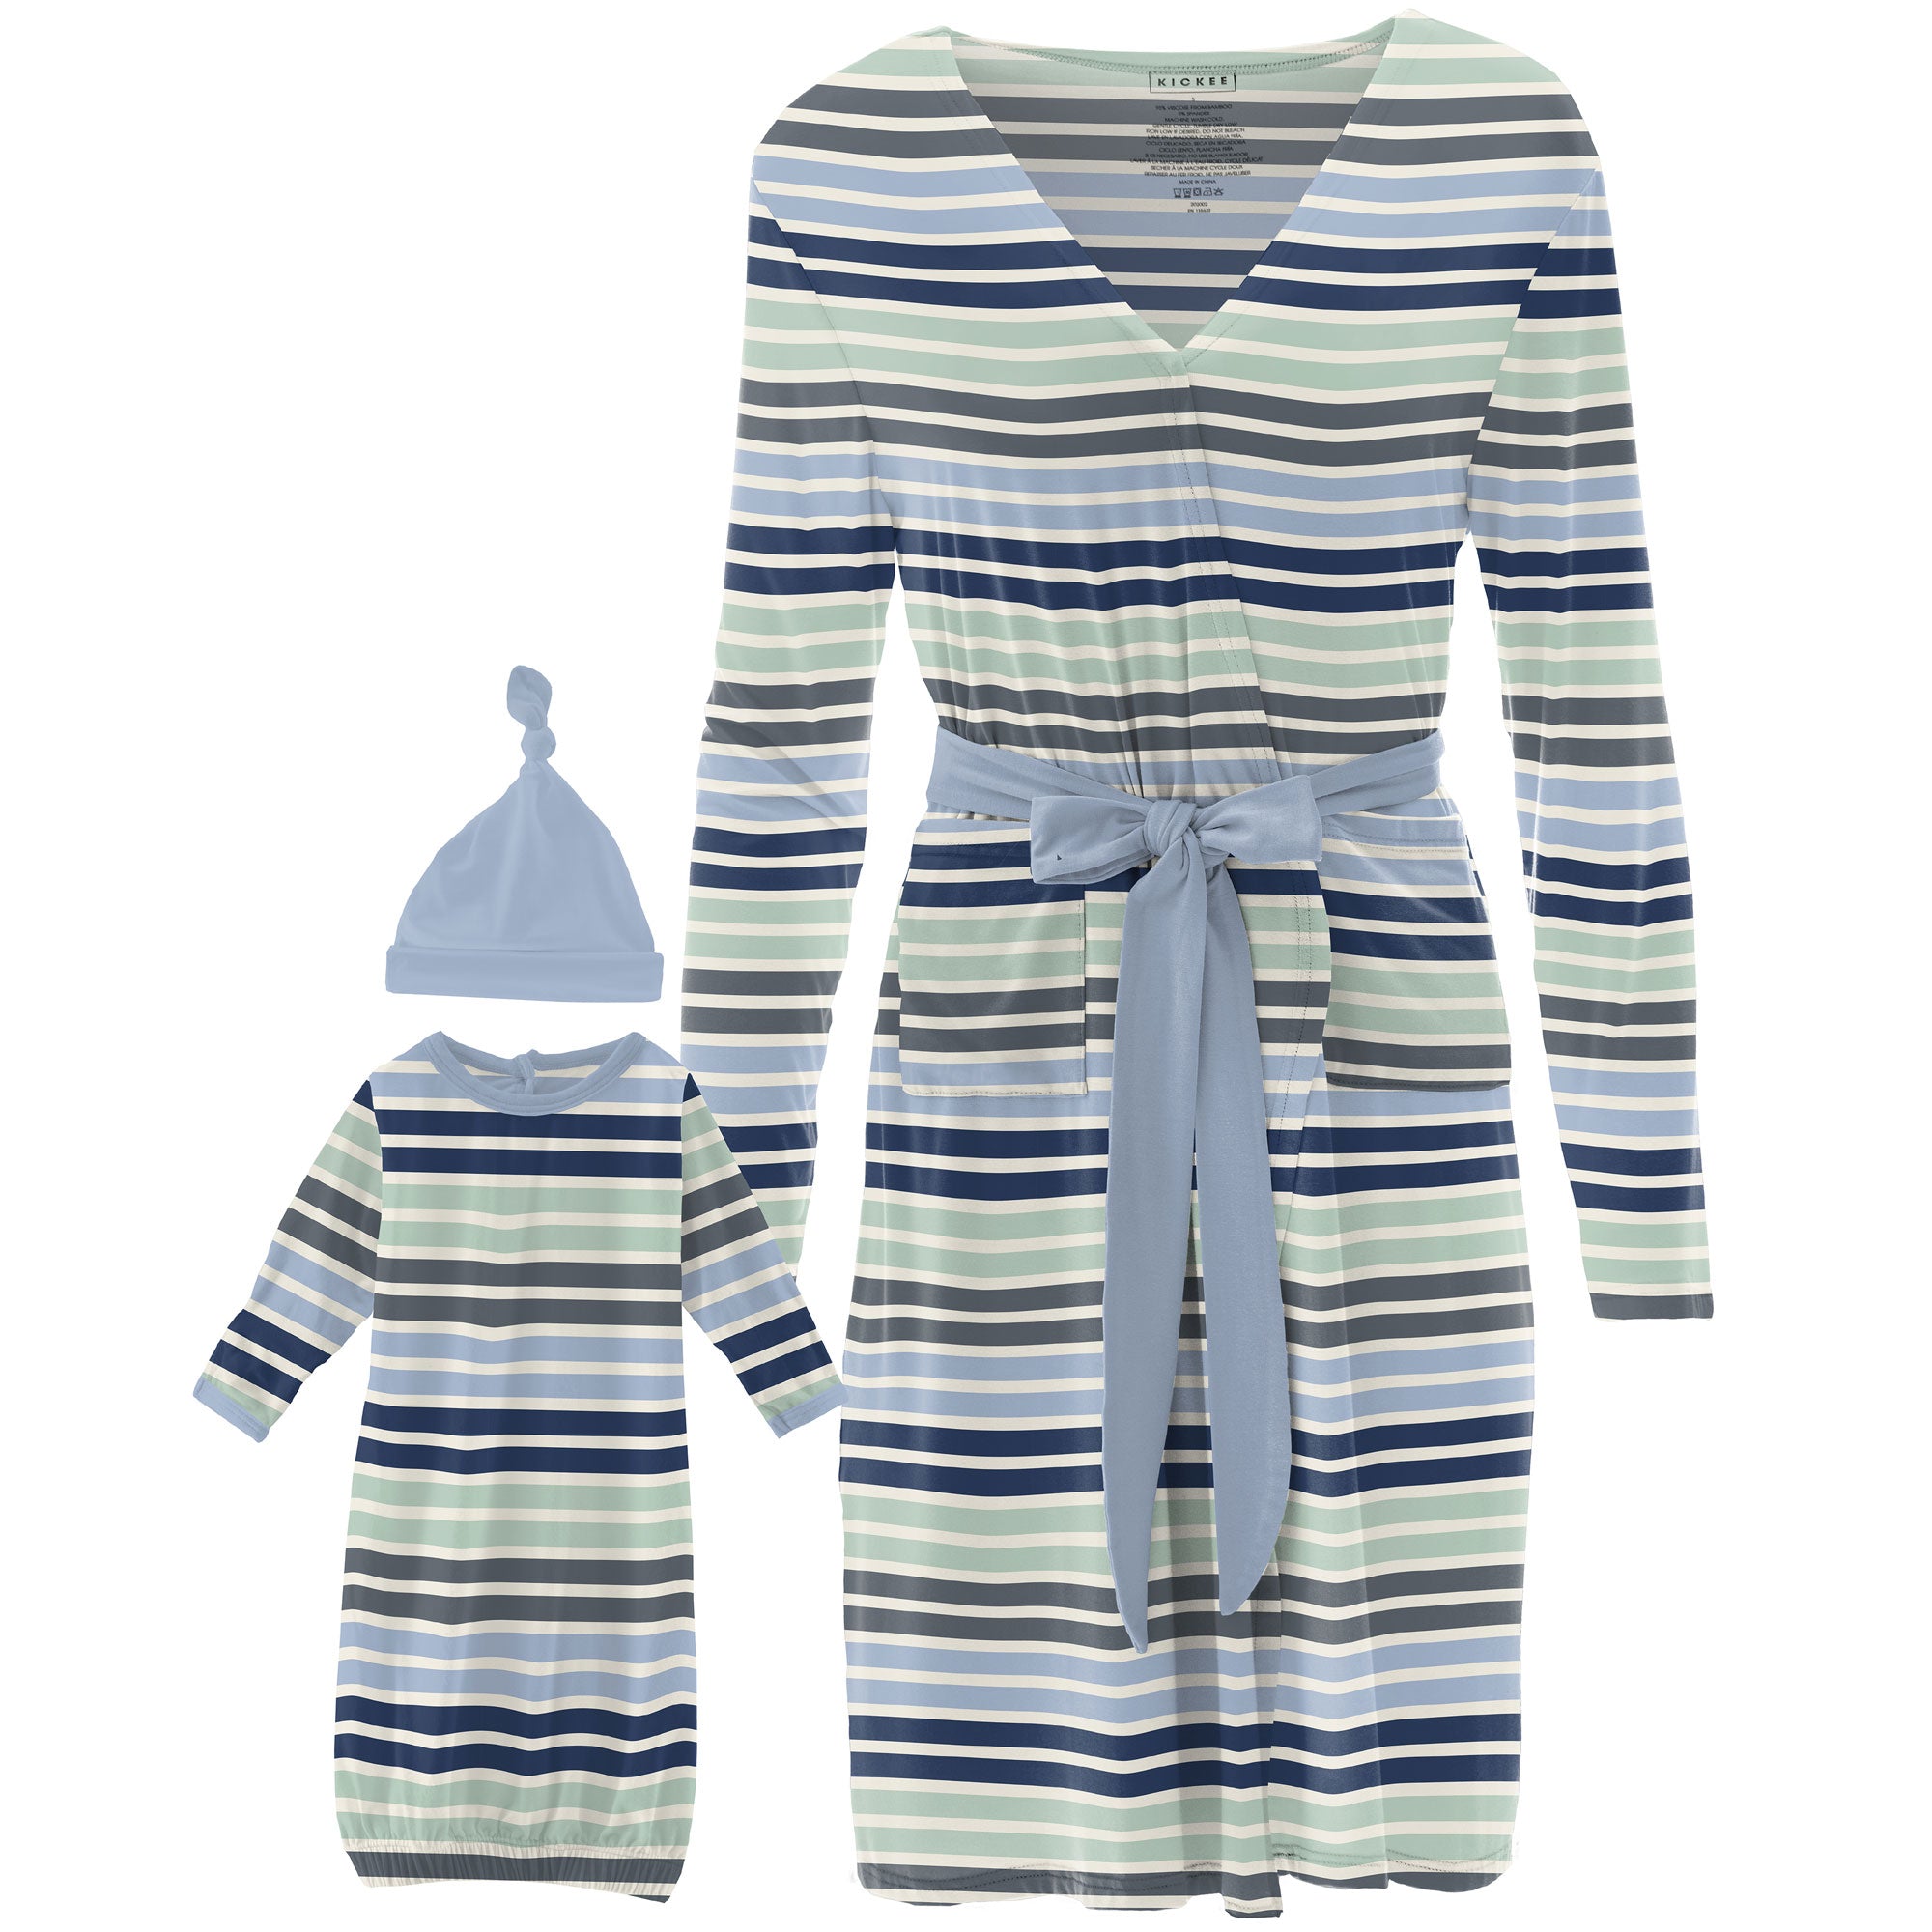 Kickee Pants Women's Maternity/Nursing Robe & Layette Gown Set - Fairground Stripe